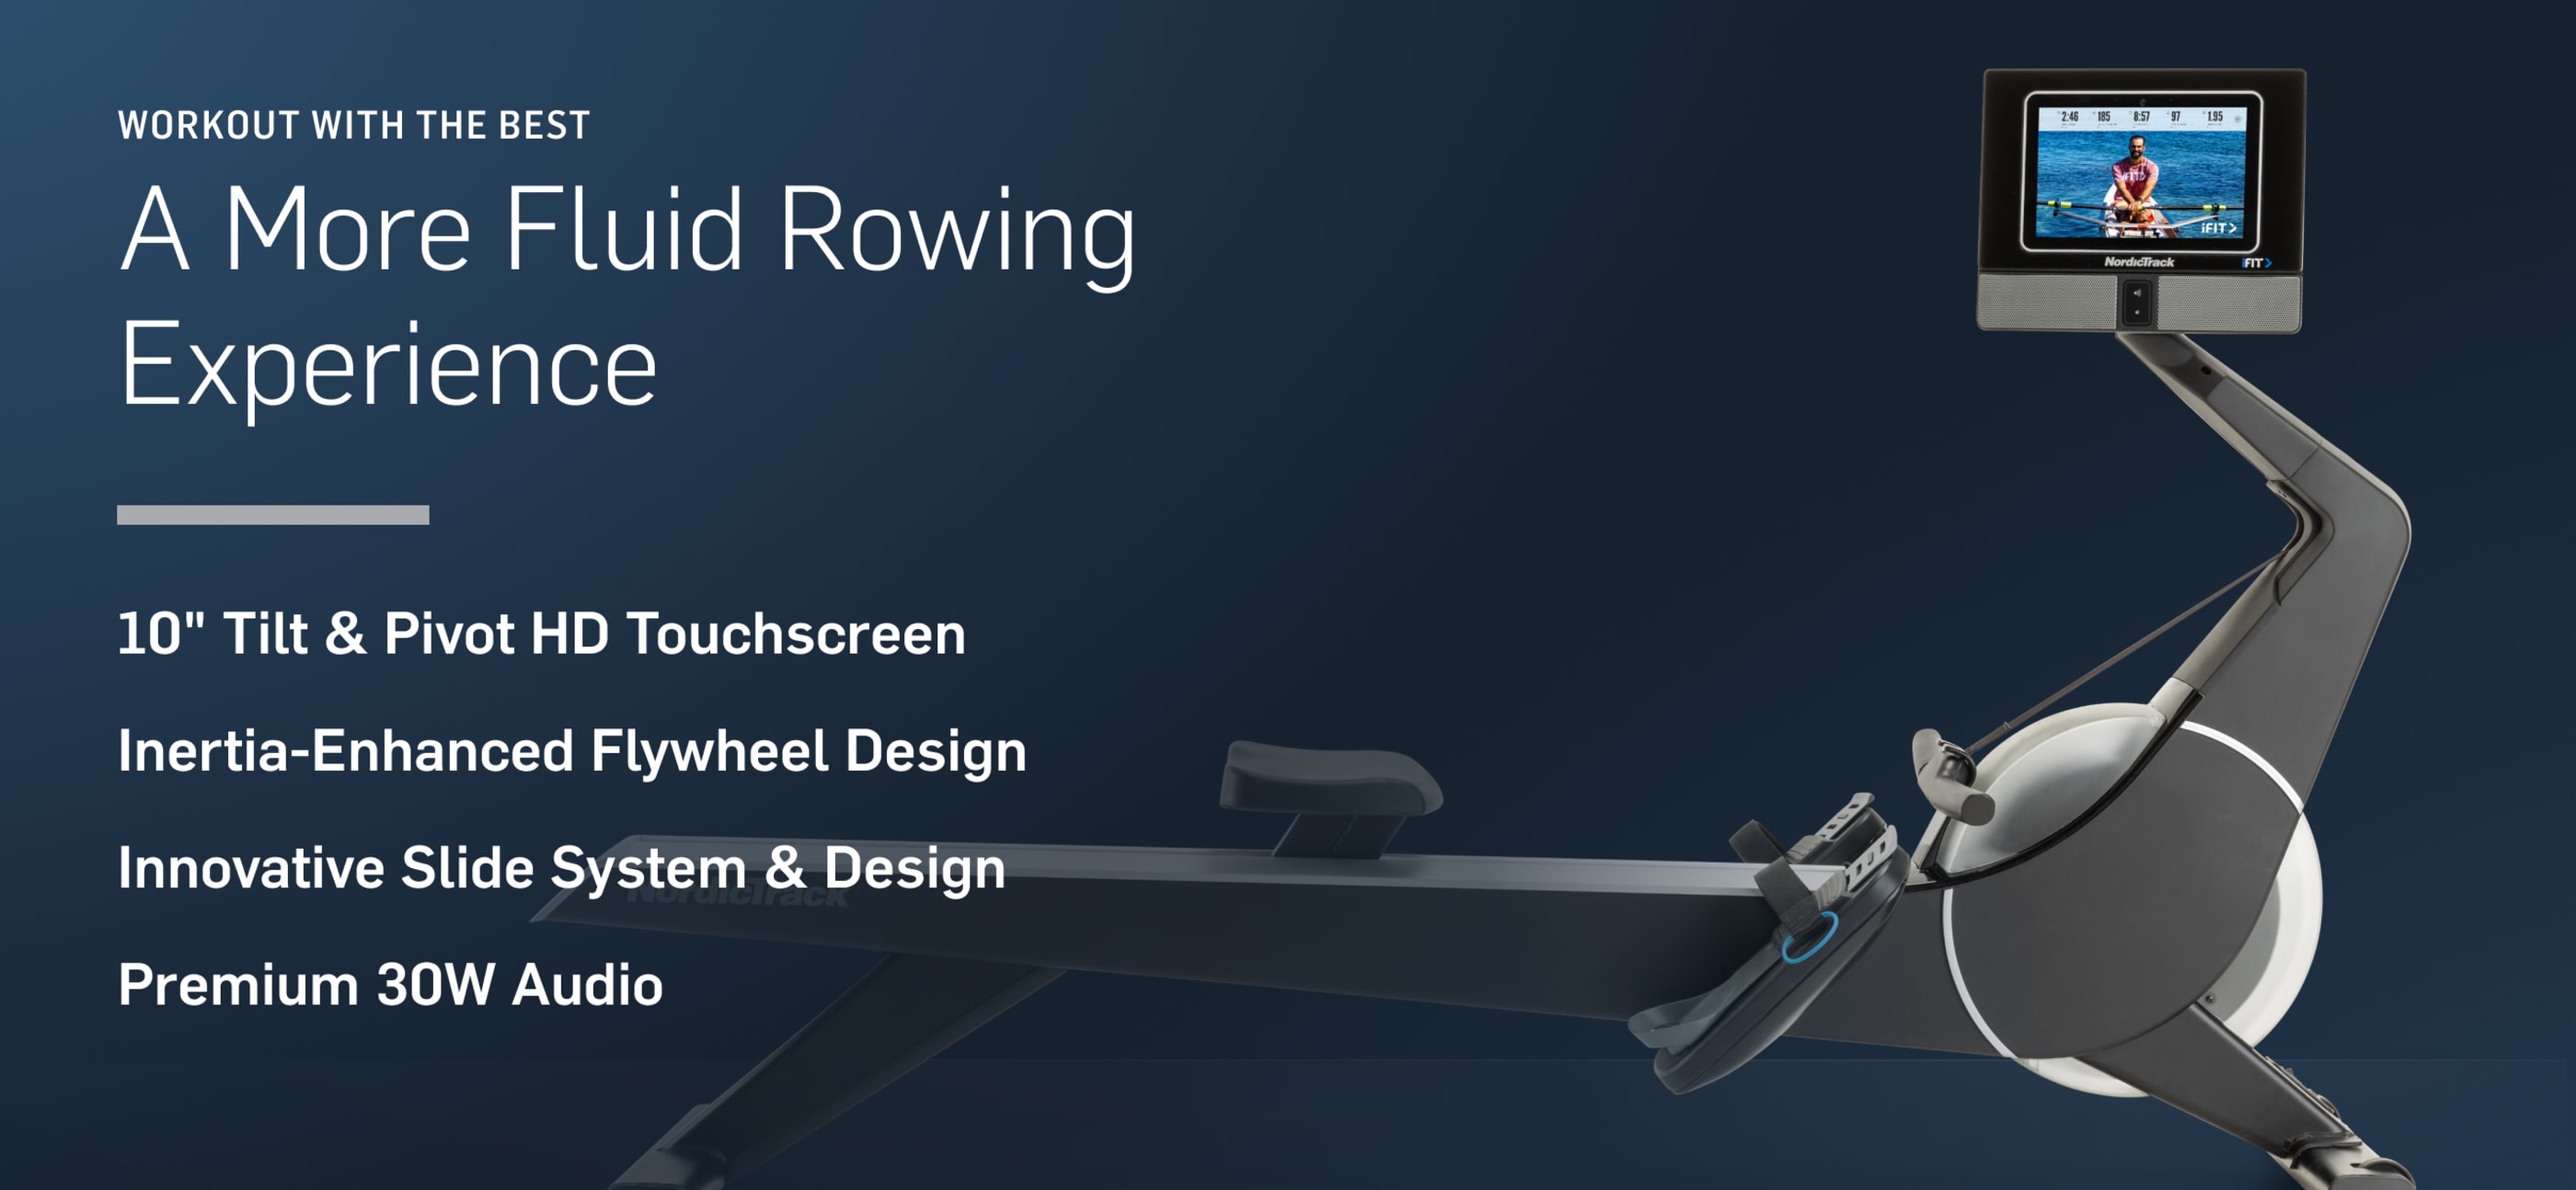 What’s New? A More Fluid Rowing Experience: NEW 10” Tilt & Pivot HD Touchscreen, NEW Inertia-Enhanced Flywheel Design, NEW Innovative Slide System & Design, NEW Premium 30W Audio.